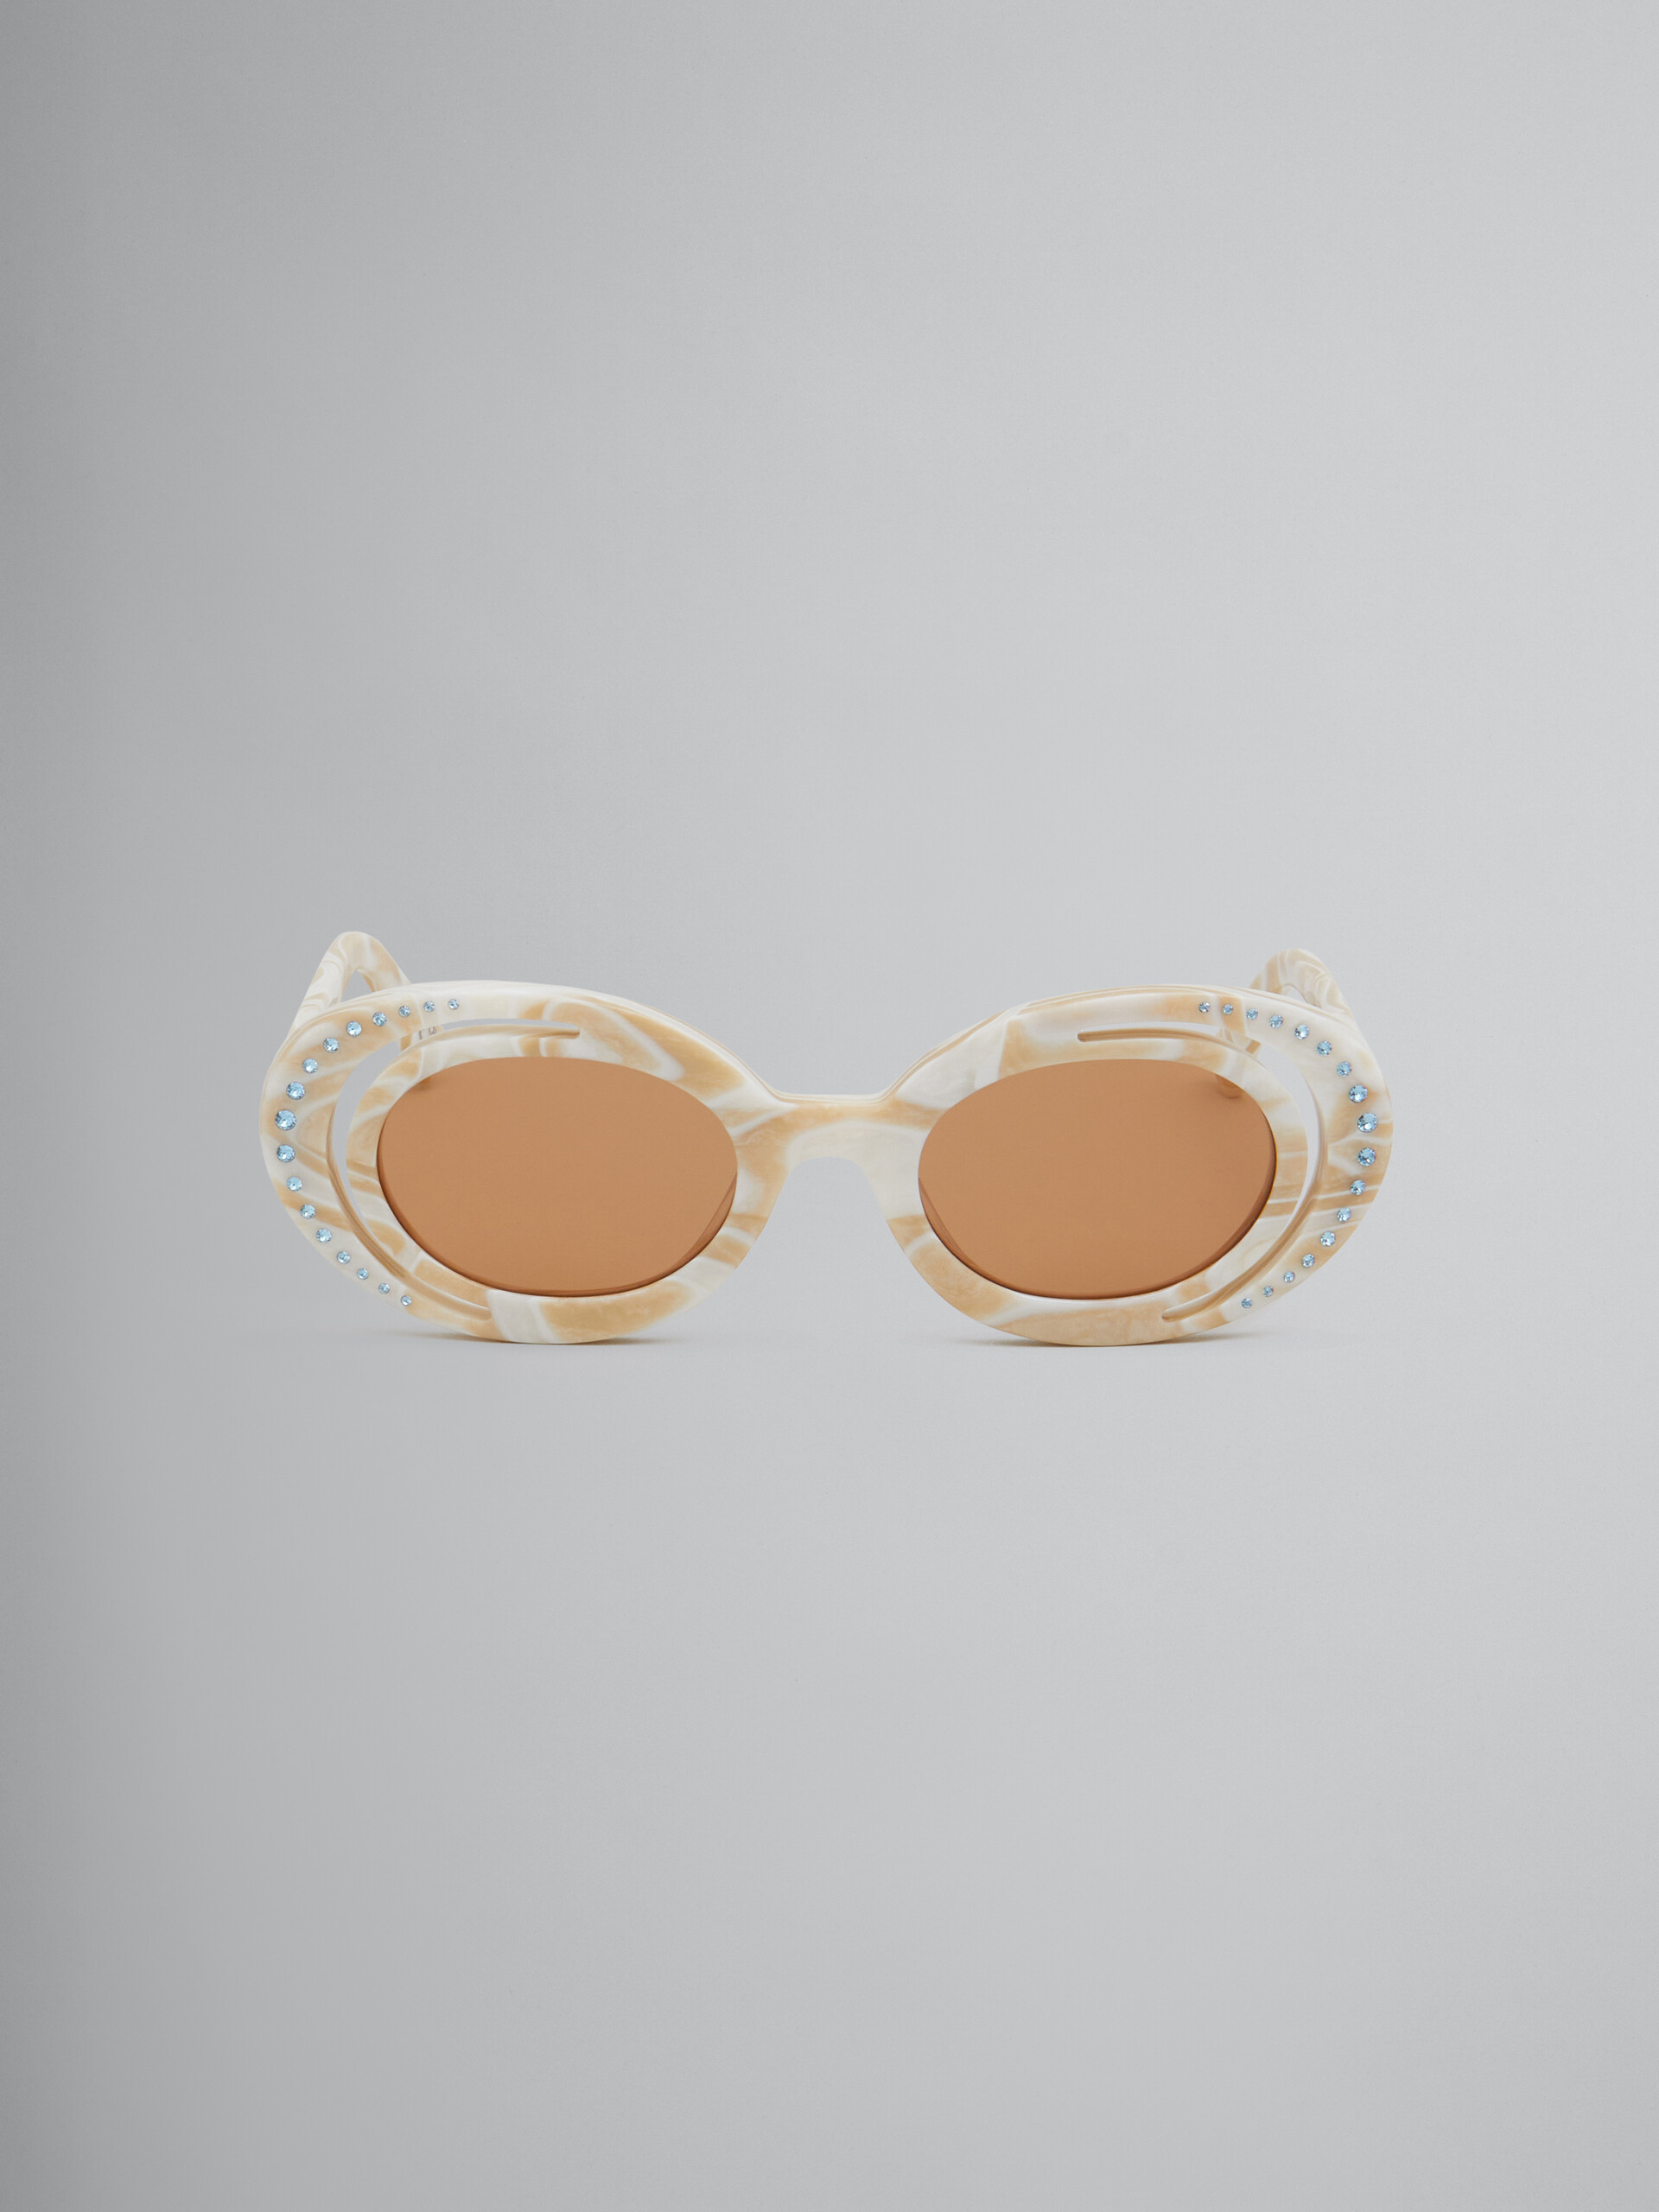 Zion Canyon white pearl sunglasses - Optical - Image 1